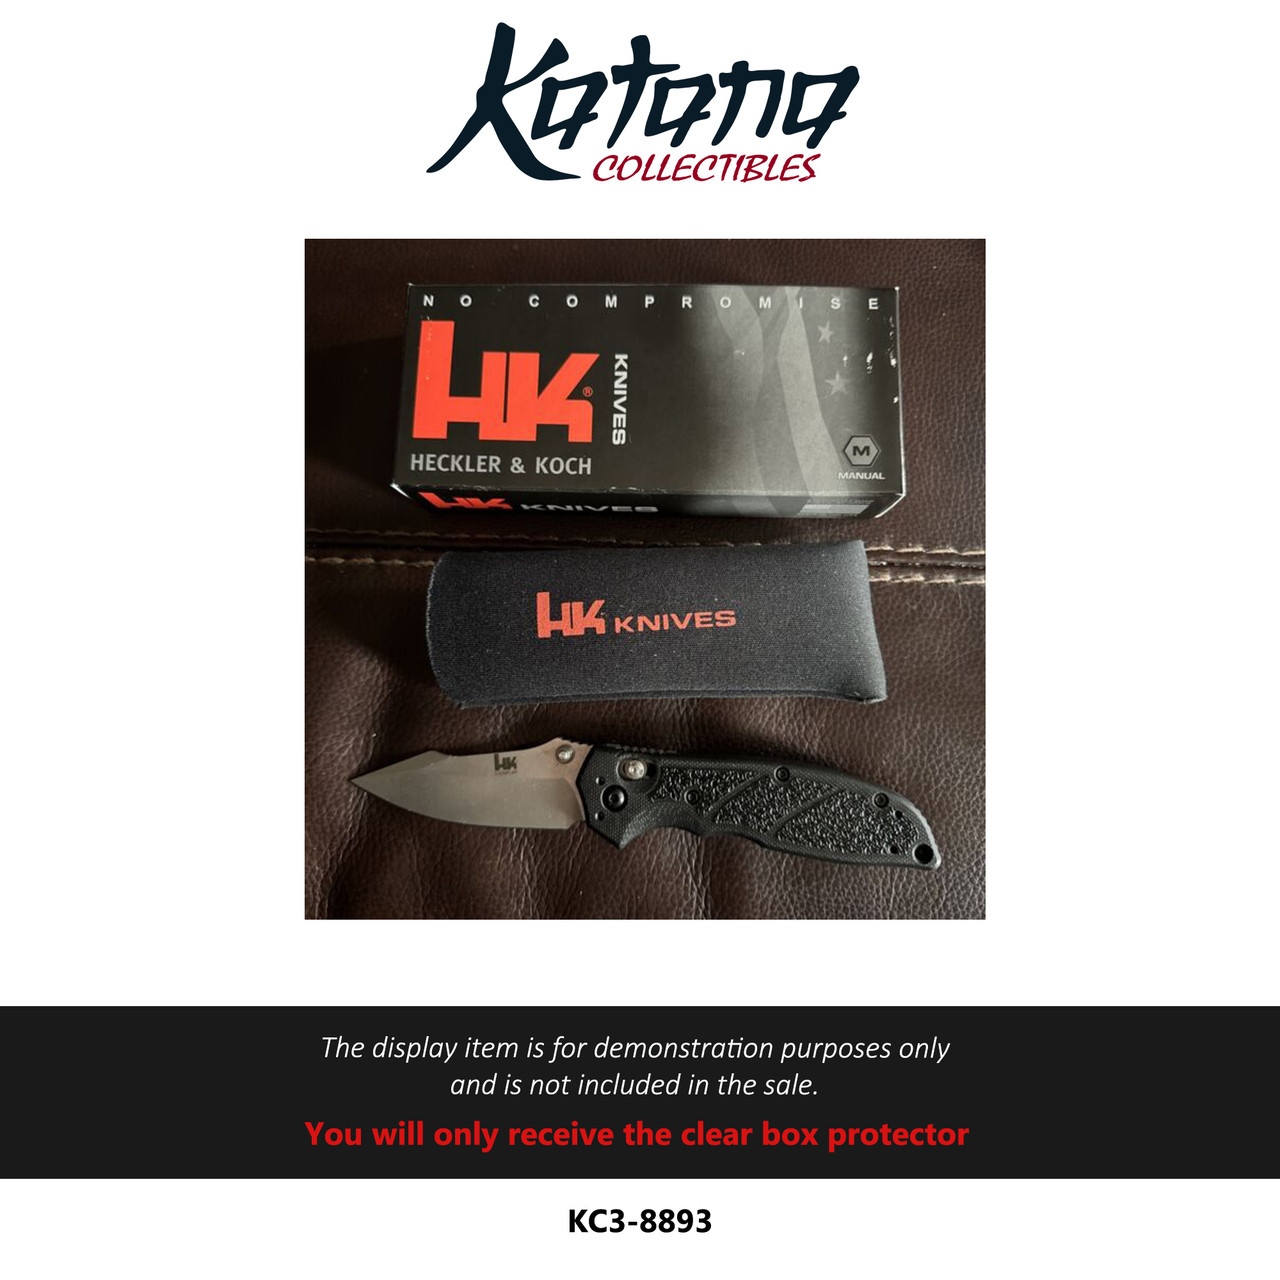 Katana Collectibles Protector For Hk Automatic Knives Box